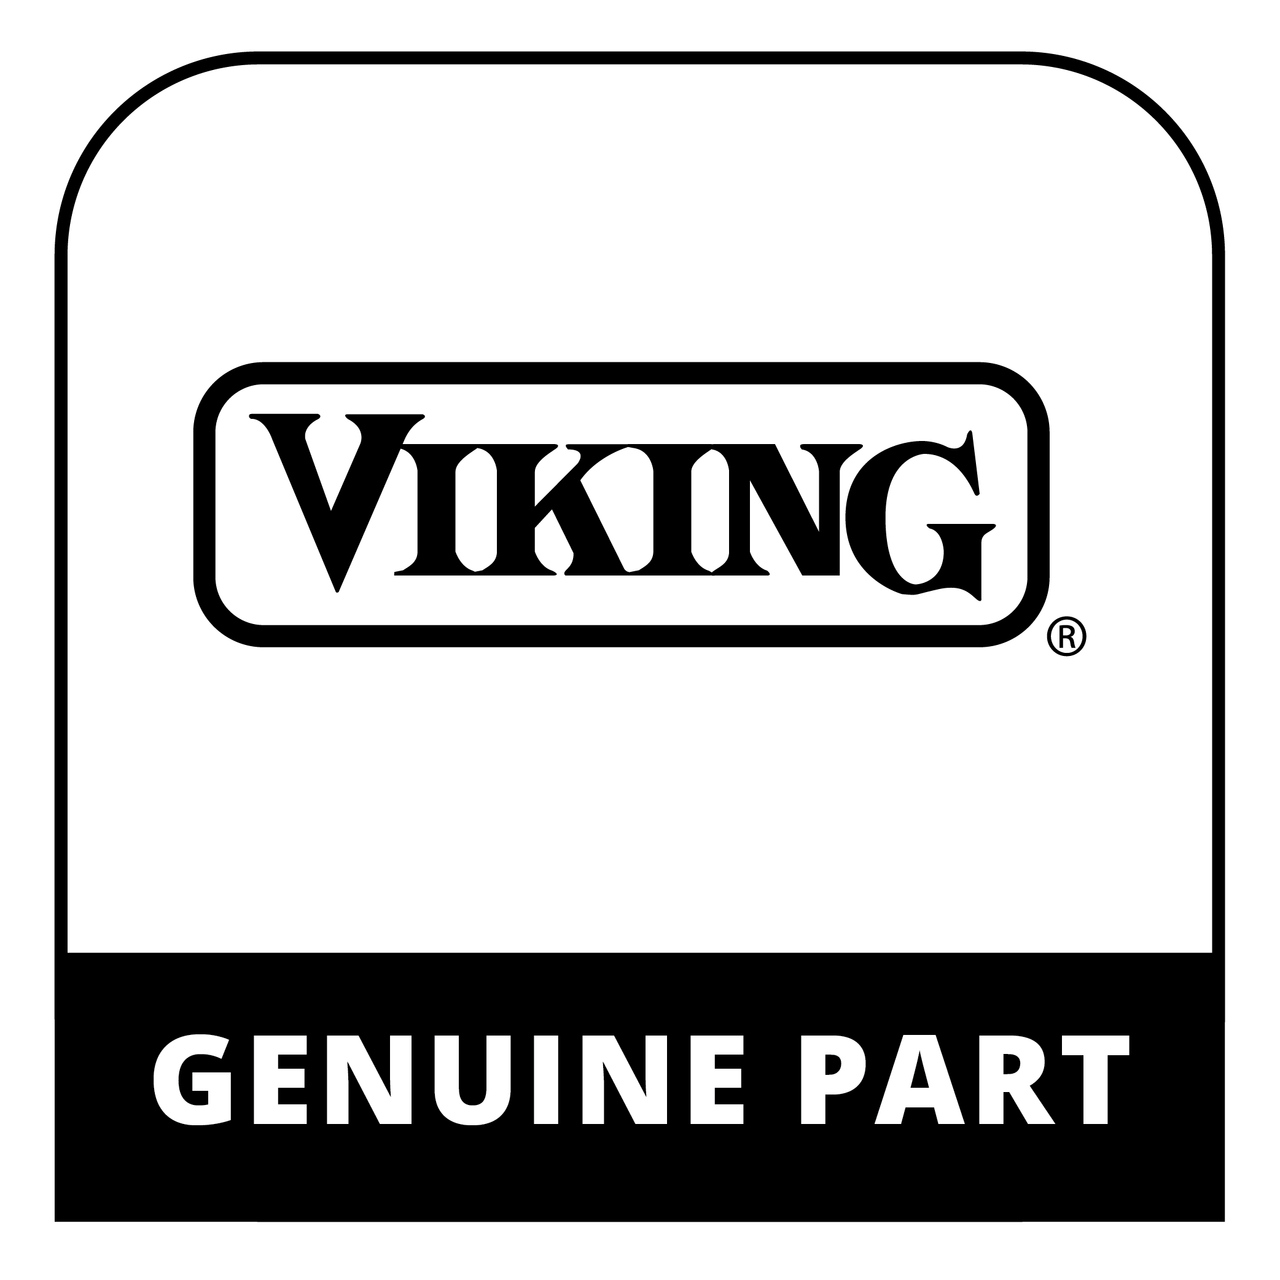 Viking LX70038 - Frame Assy 54 Cabinet - Genuine Viking Part